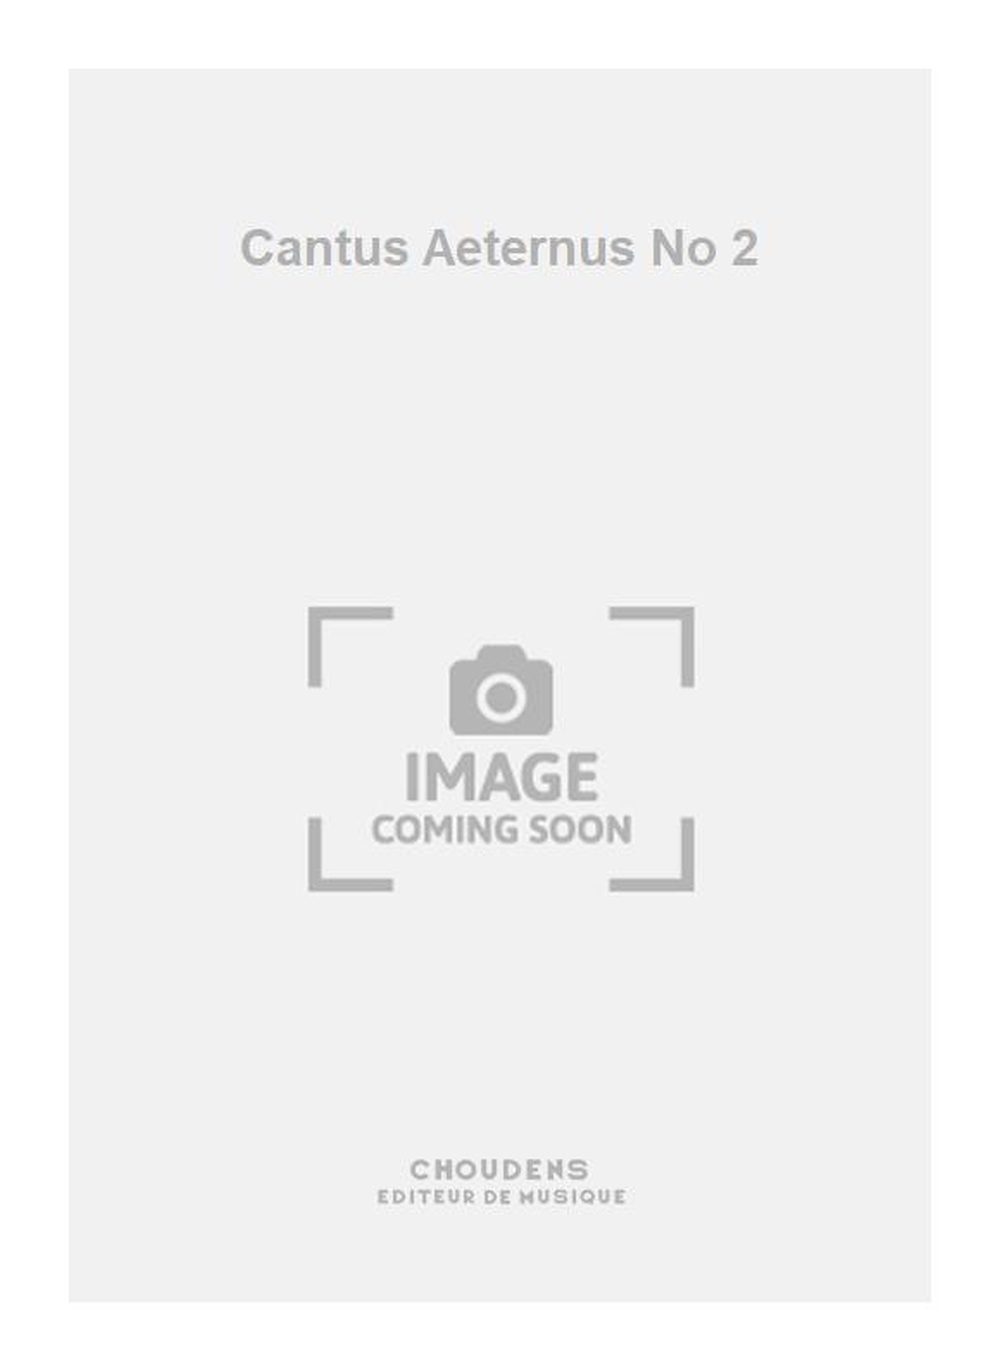 Bruzdowicz: Cantus Aeternus No 2